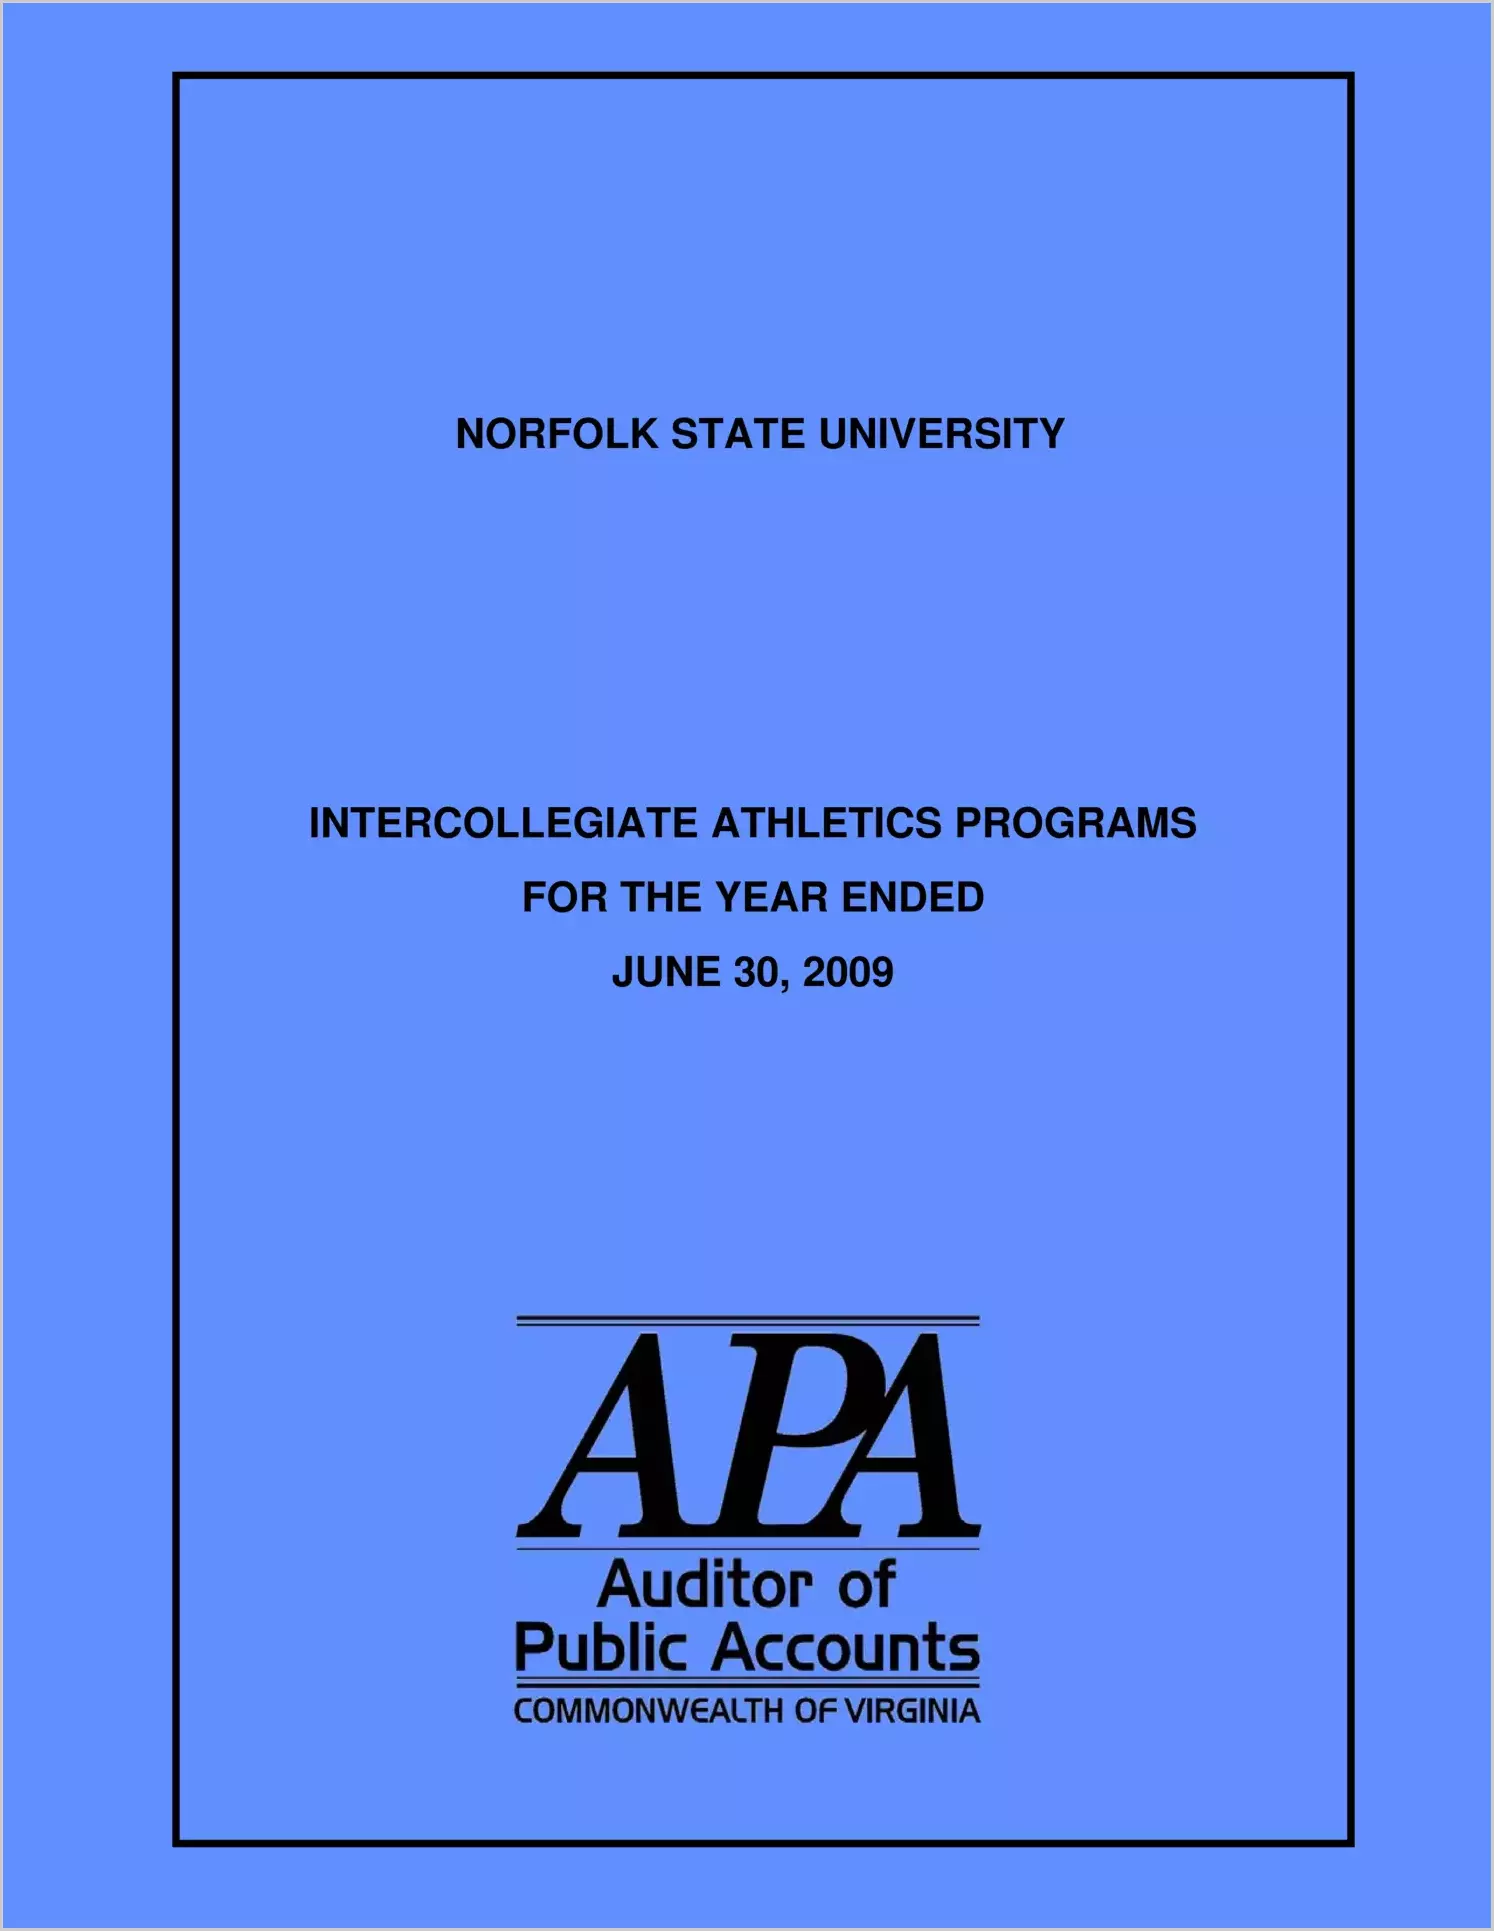 Norfolk State University Intercollegiate Athletics Programs for the year ended June 30, 2009